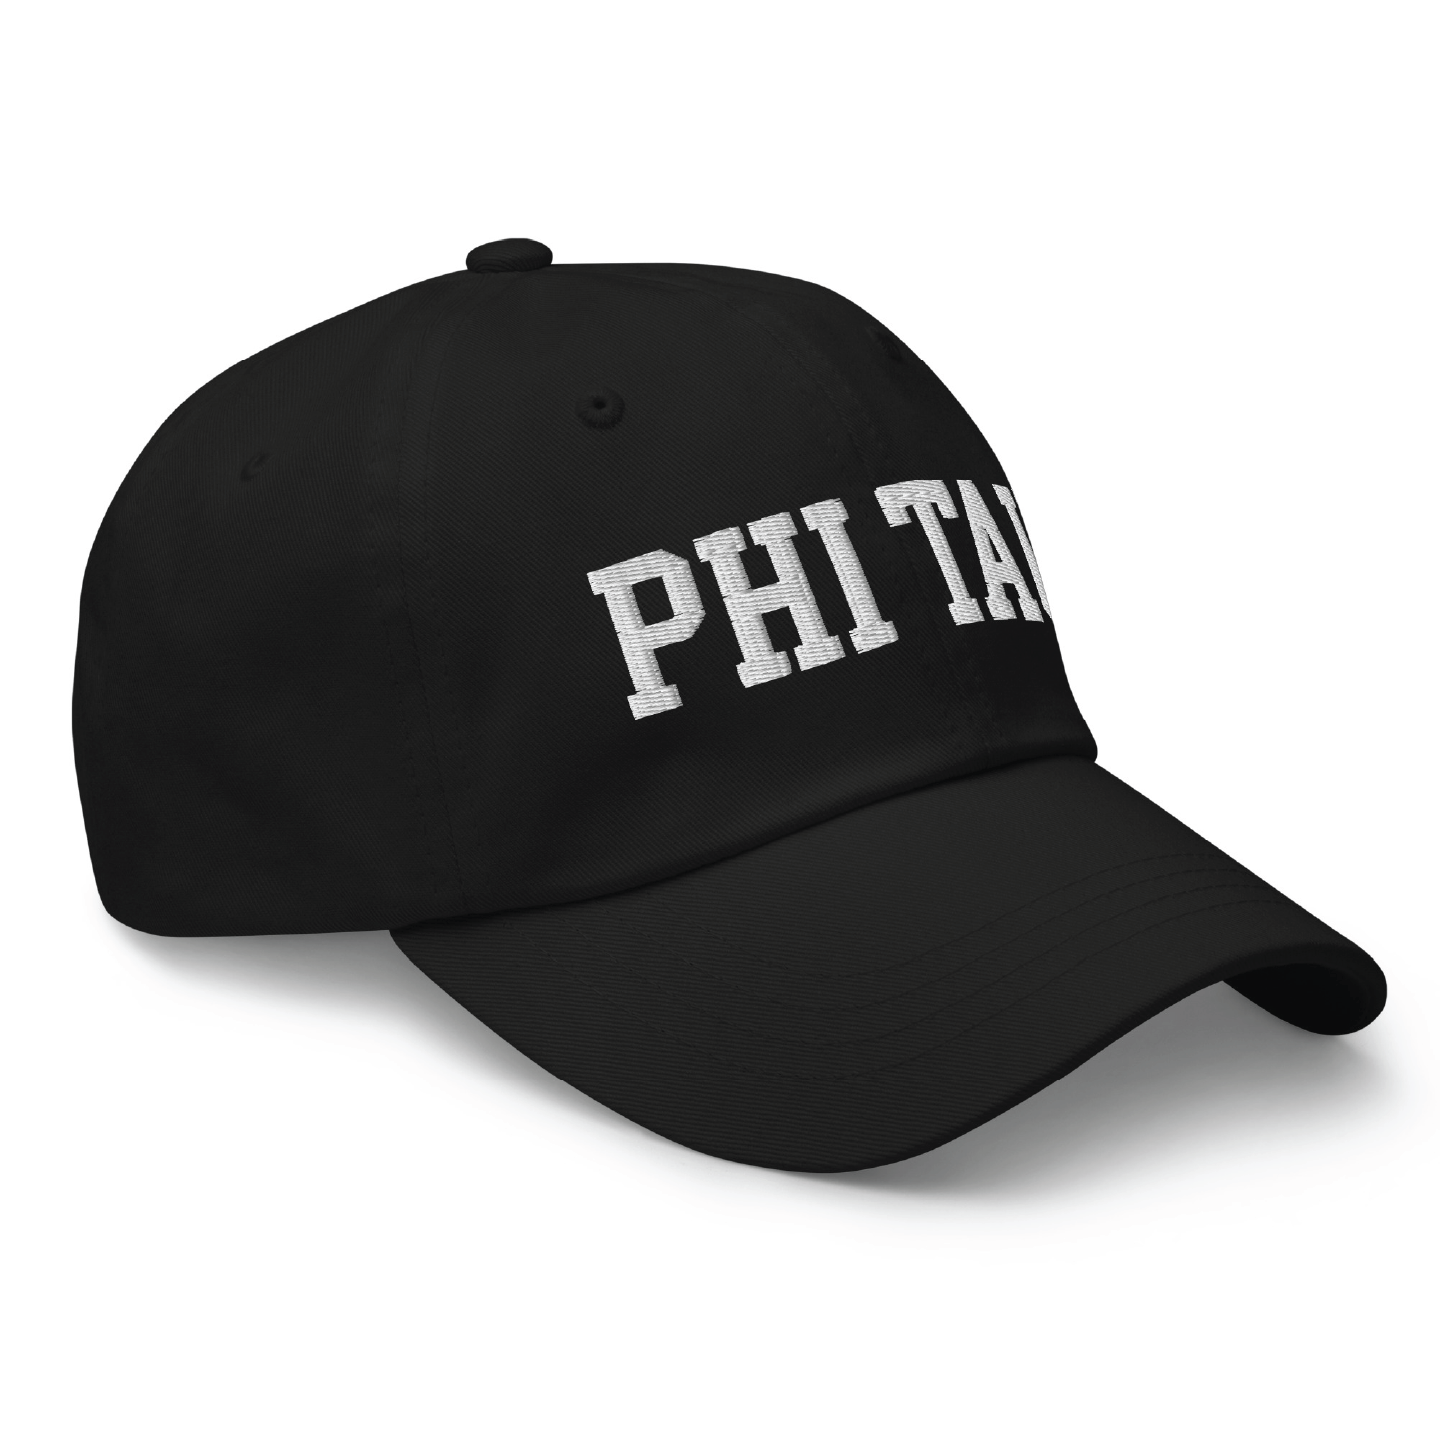 Phi Tau Block Letter Hat